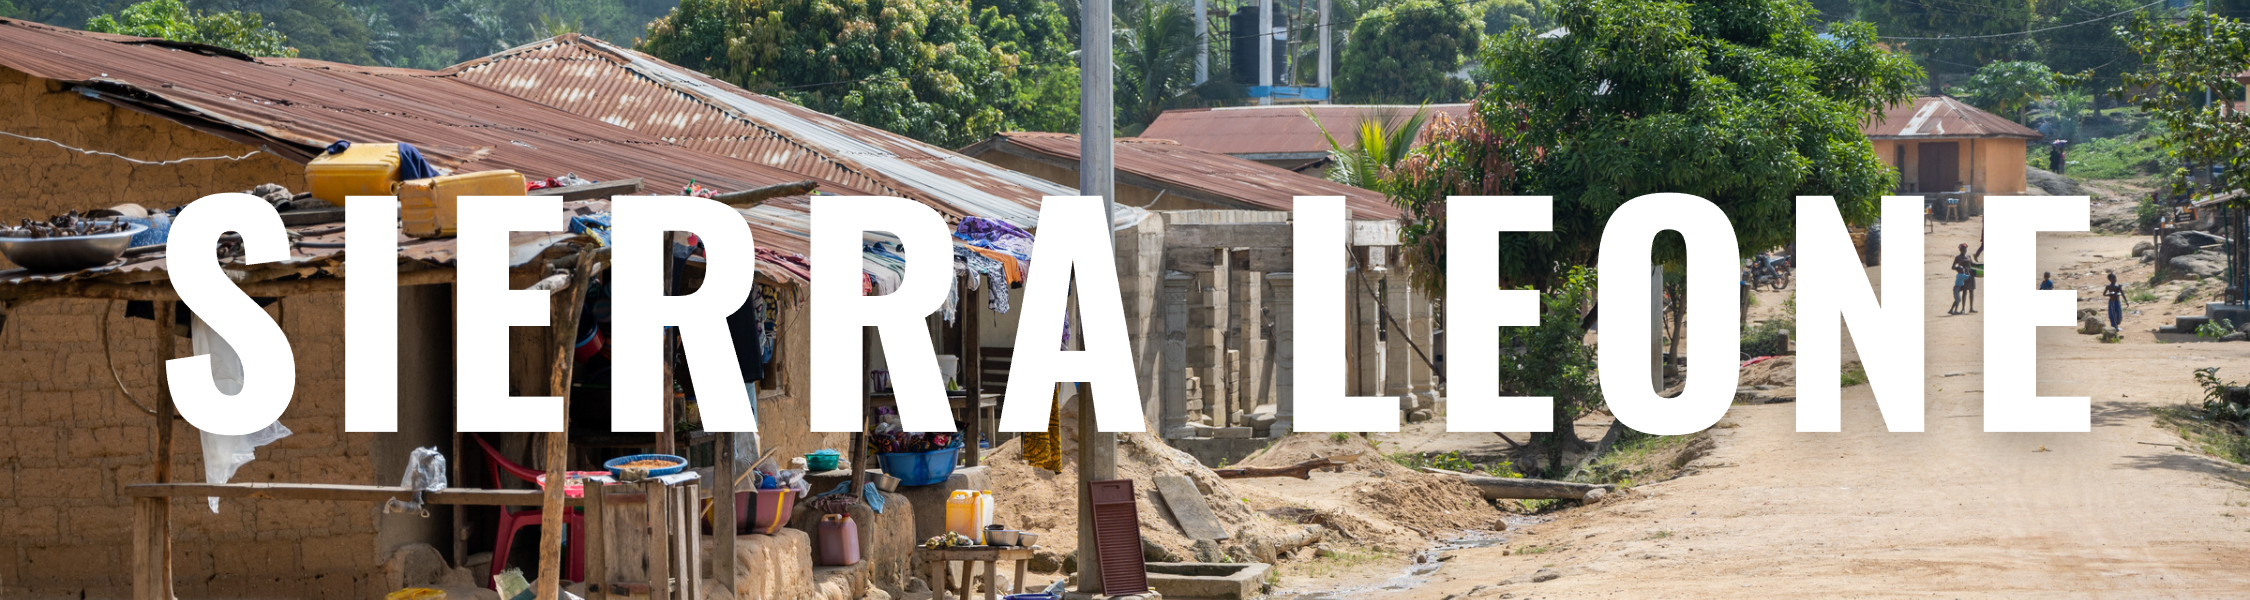 Sierra Leone Header Image